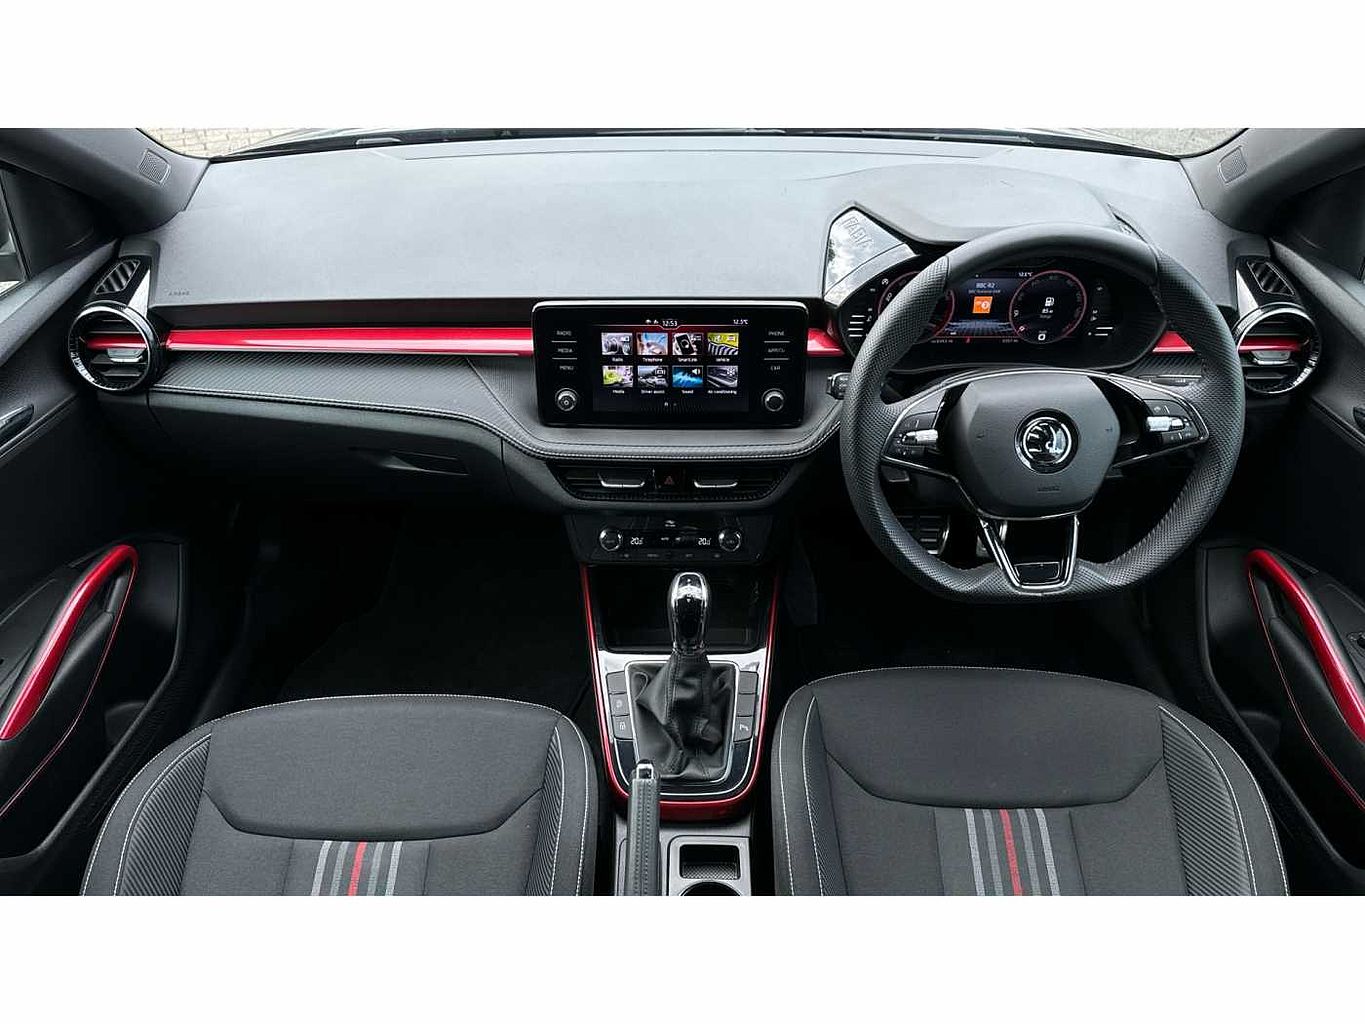 SKODA Fabia 1.0 TSI Monte Carlo (110PS) DSG Hatchback